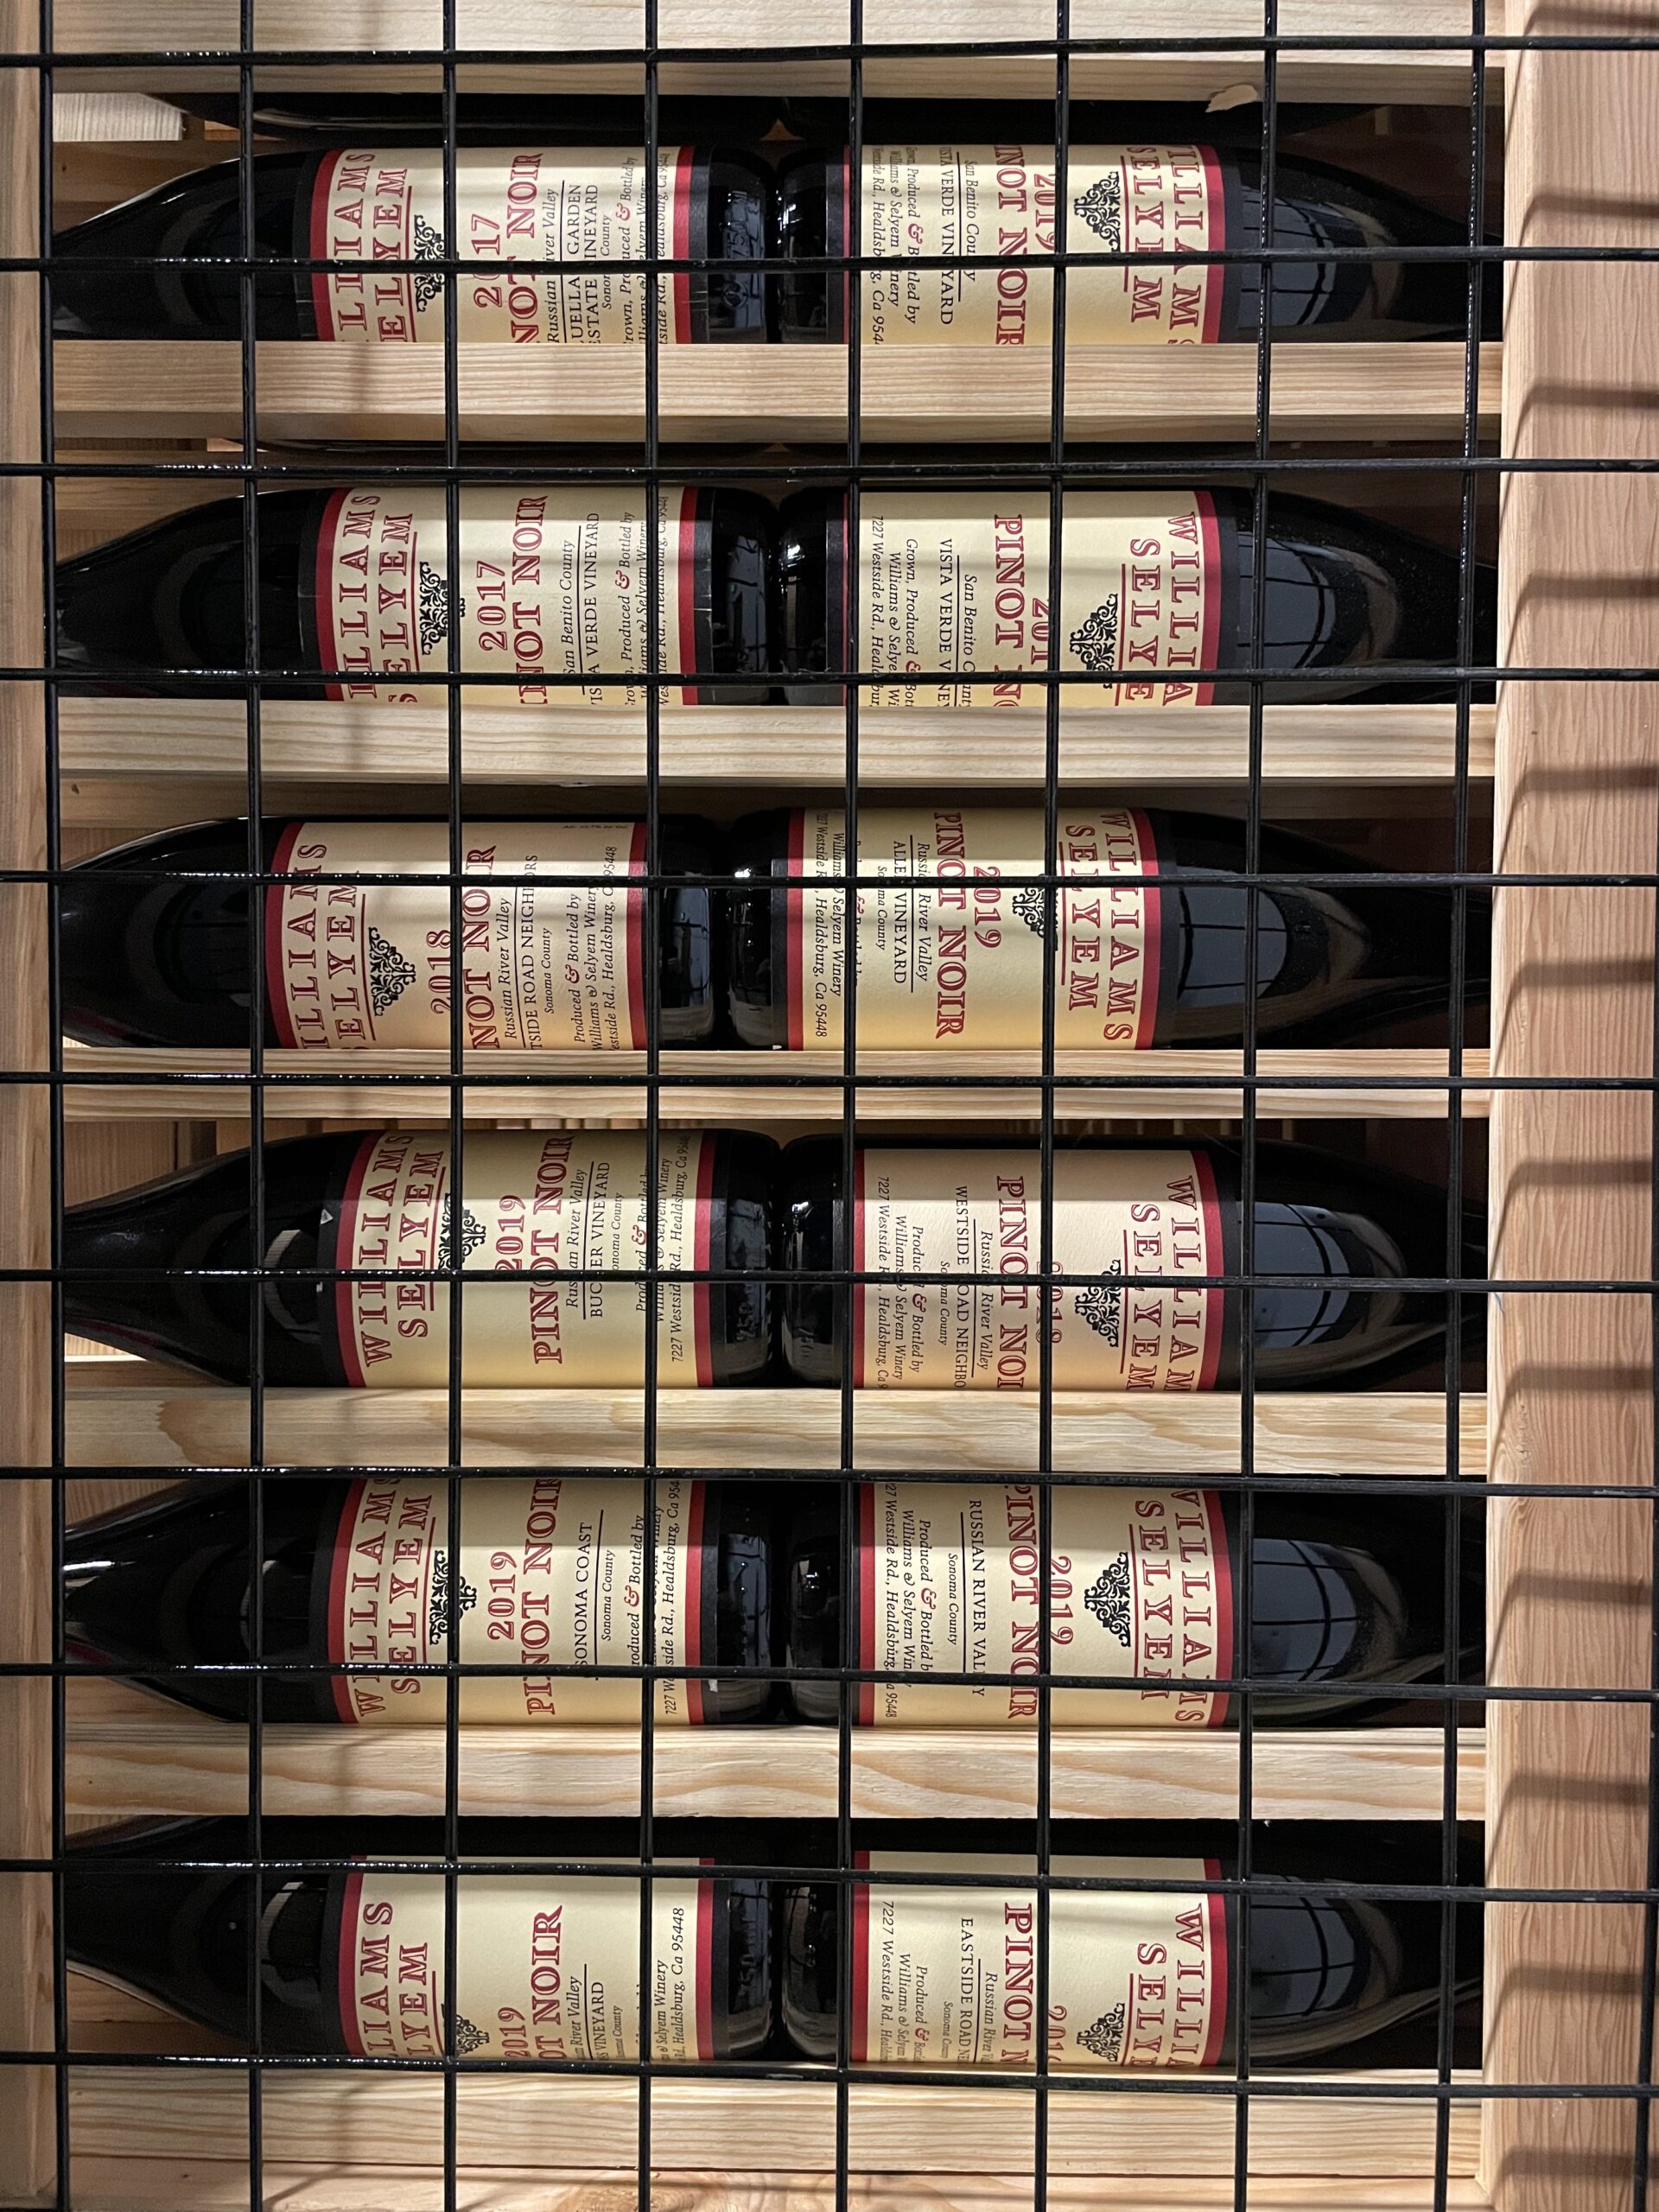 Williams Selyem bottles in our wooden wine racks